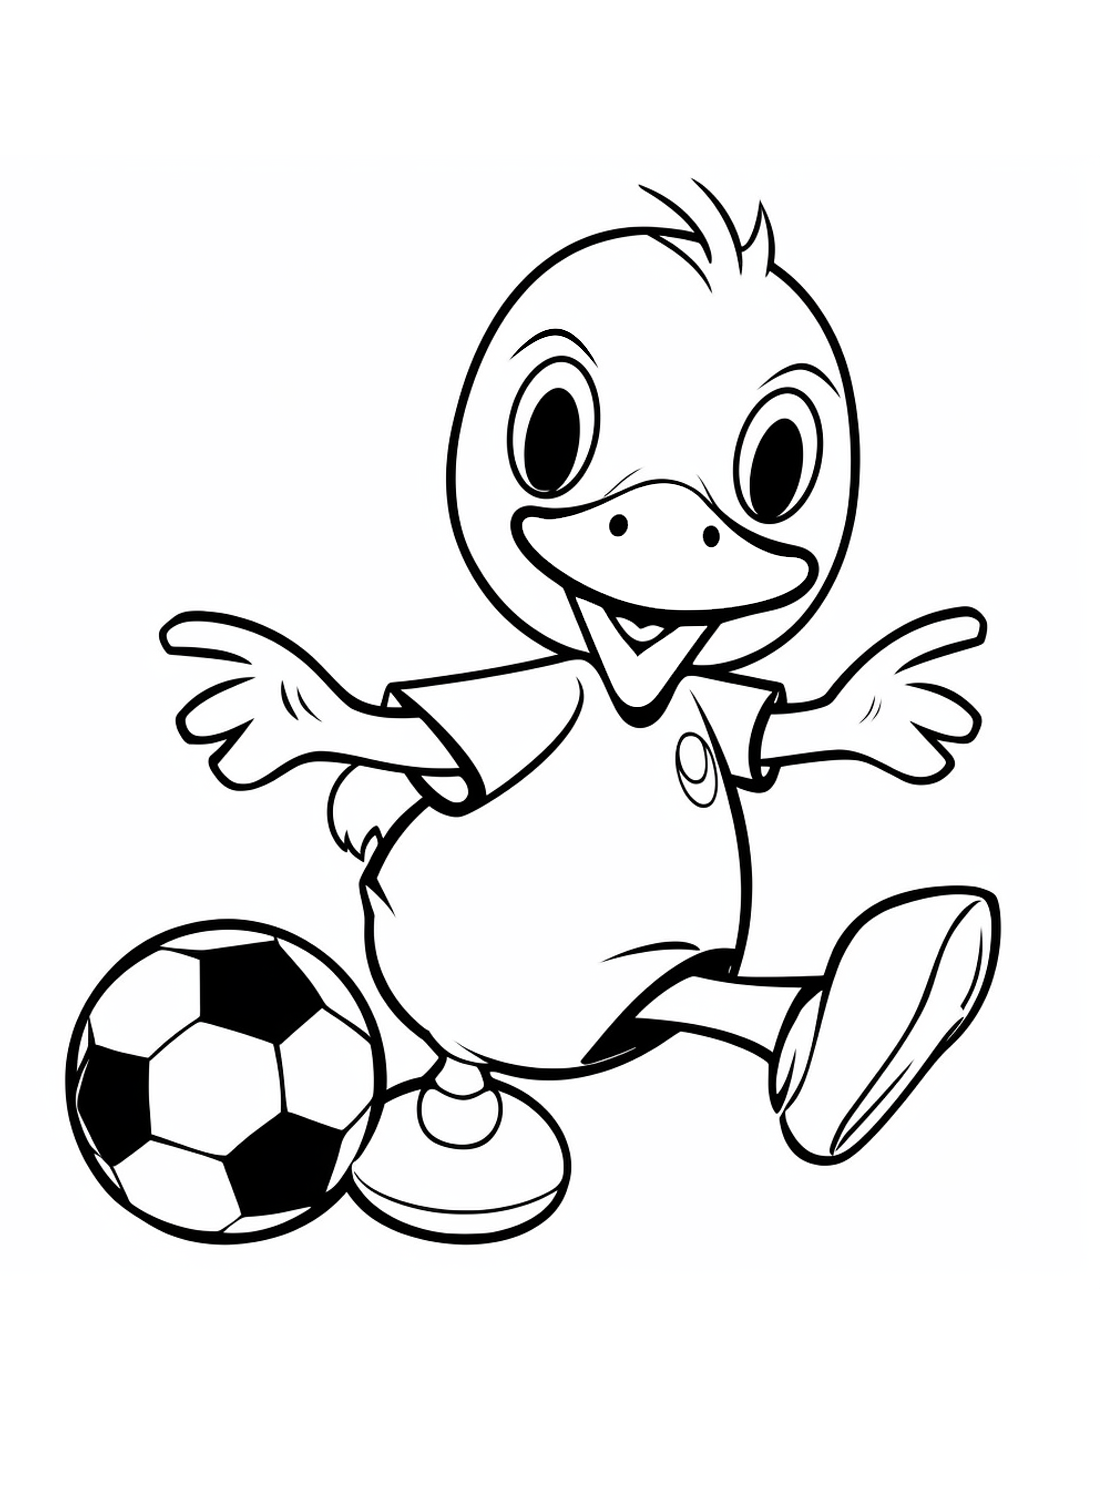 Un canard joue au football de Duckling